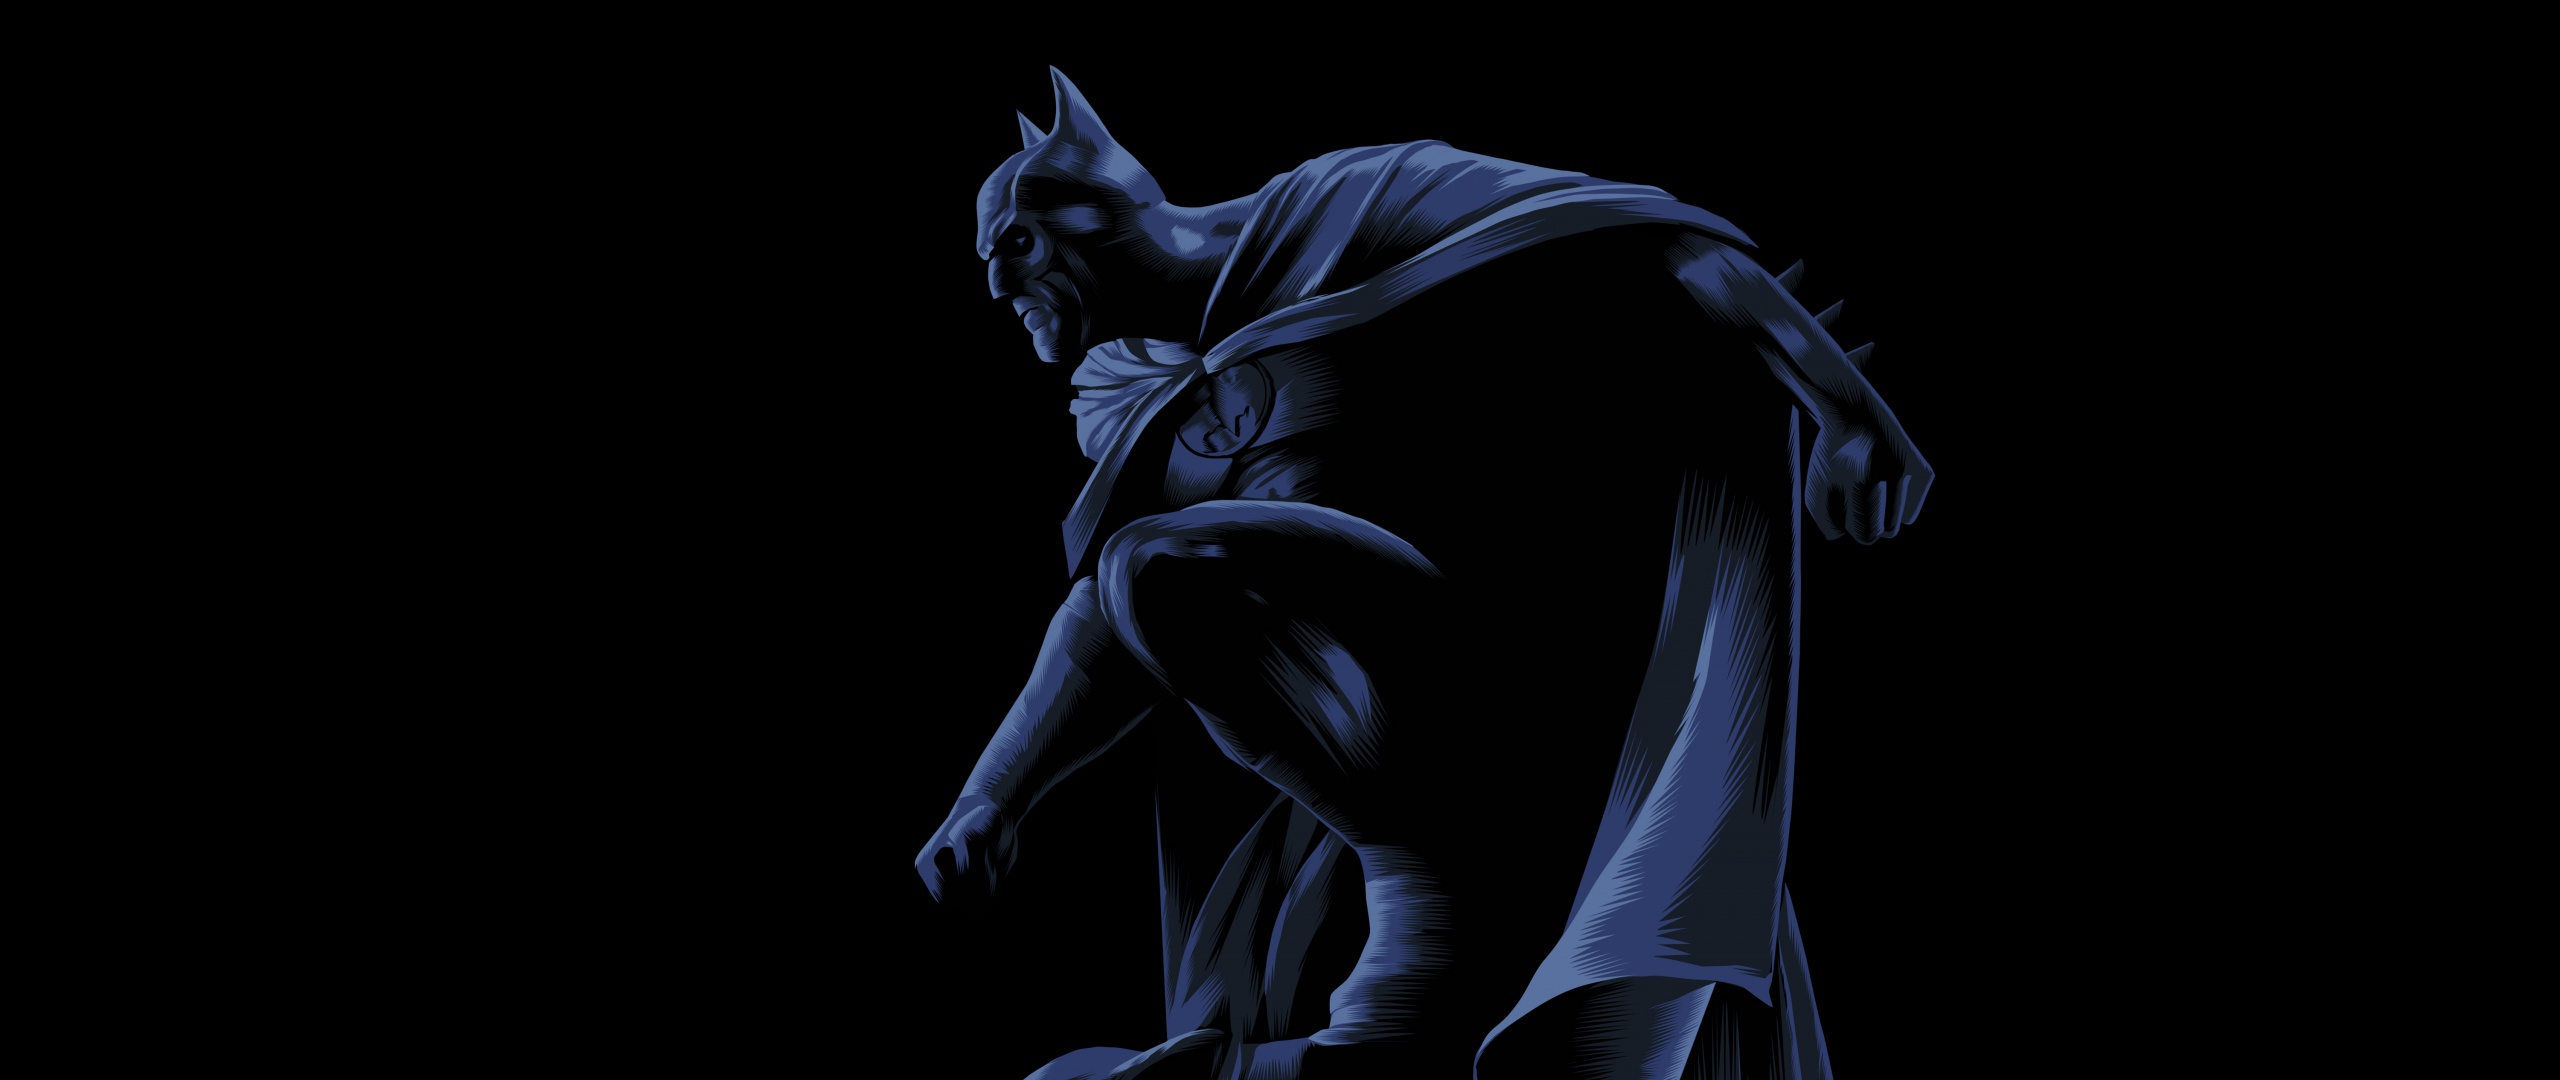 Batman Wallpapers HD